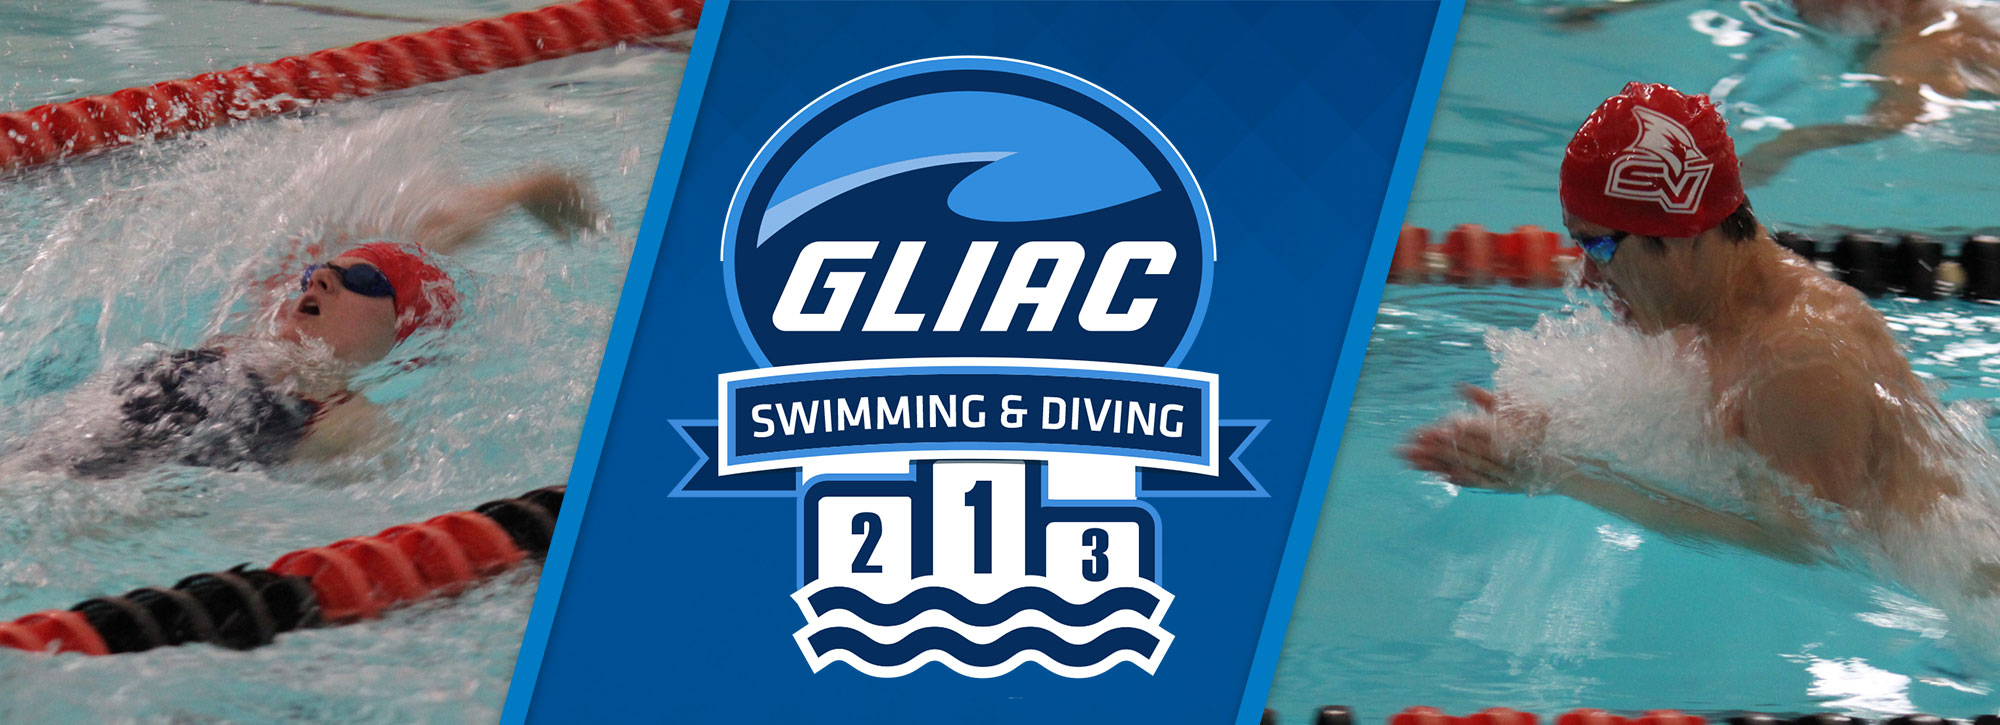 Saginaw Valley's Thielen & Yap Claim GLIAC Swimming Weekly Awards